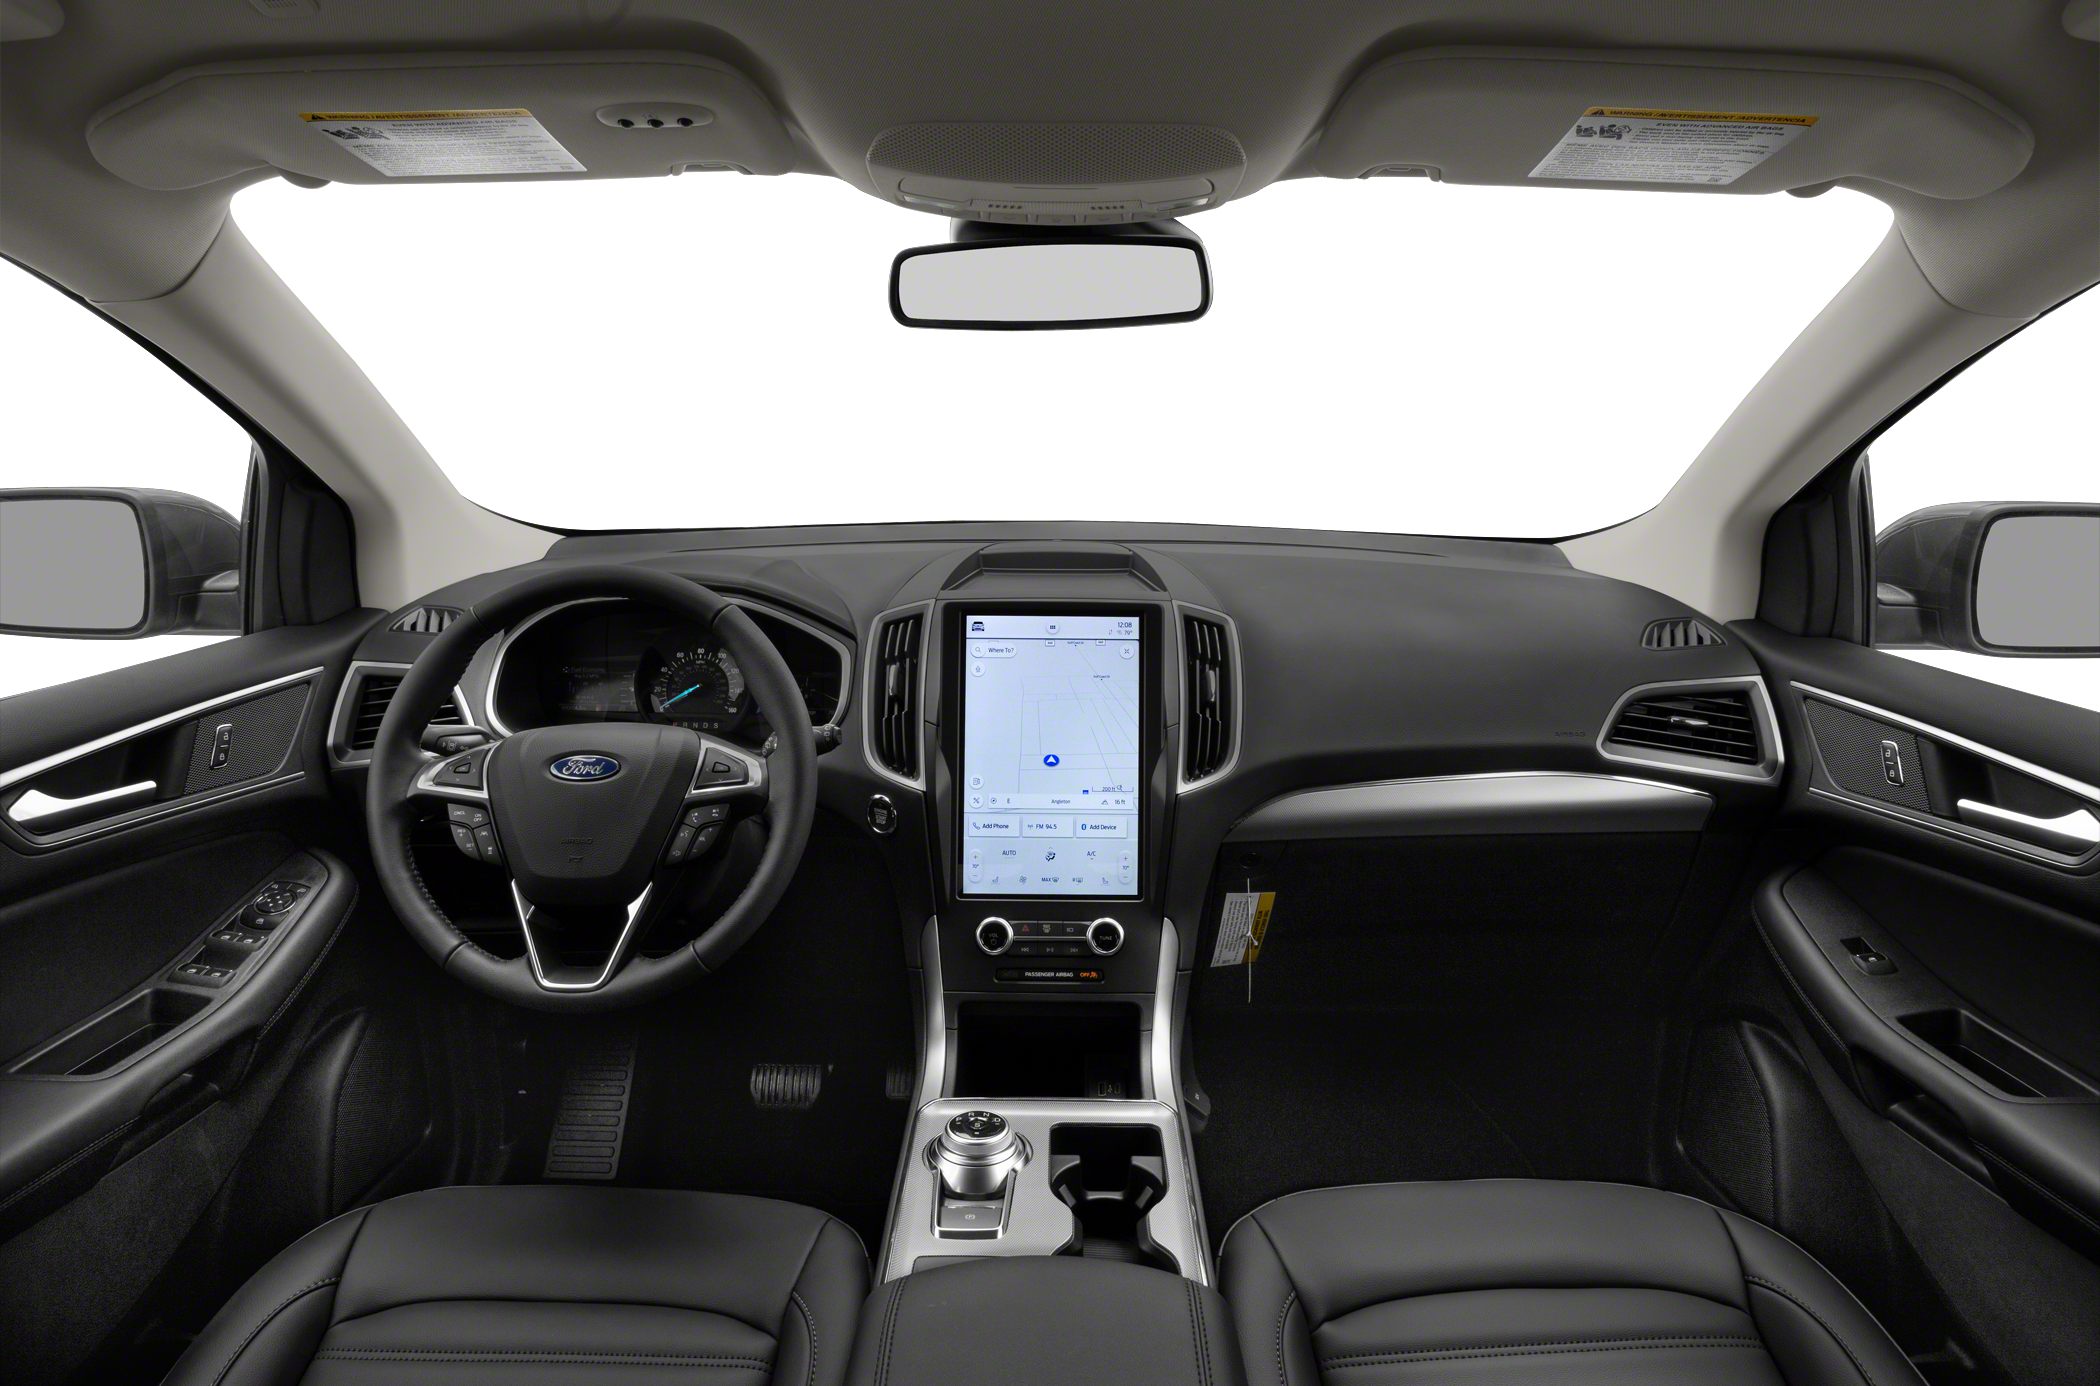 2023 ford edge interior